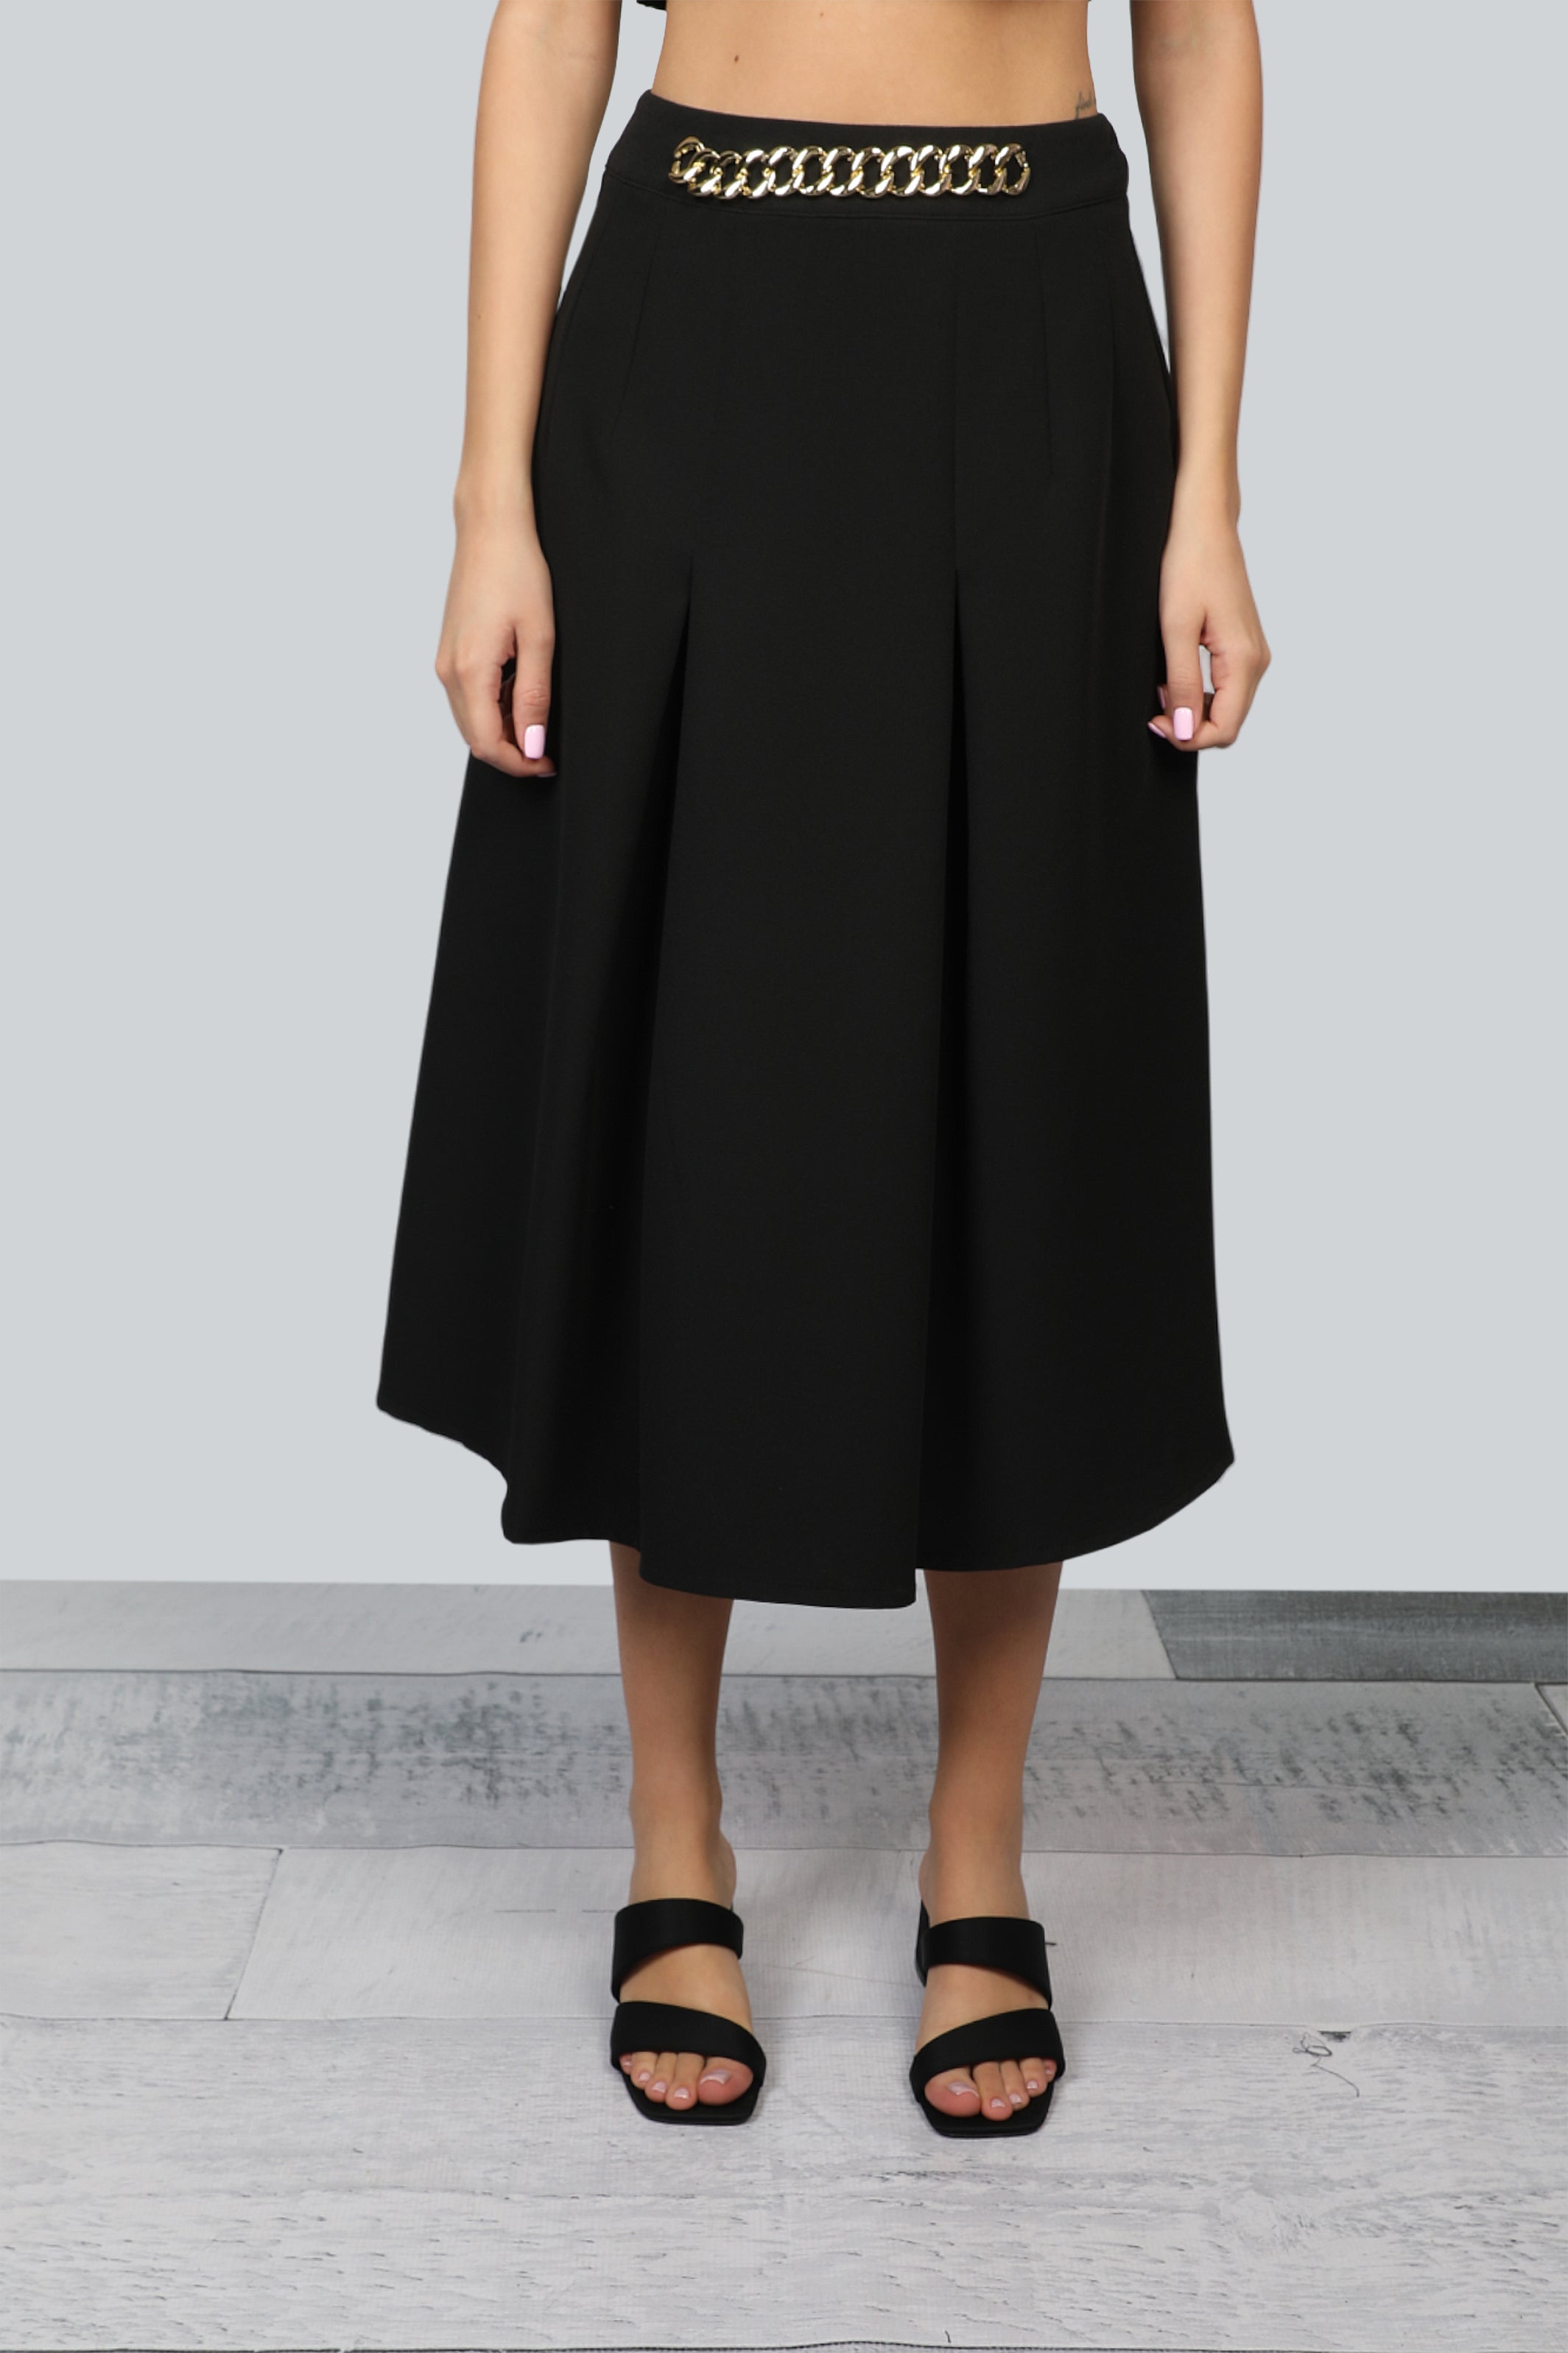 Classy Black Knee Length Skirts With Waist Chain